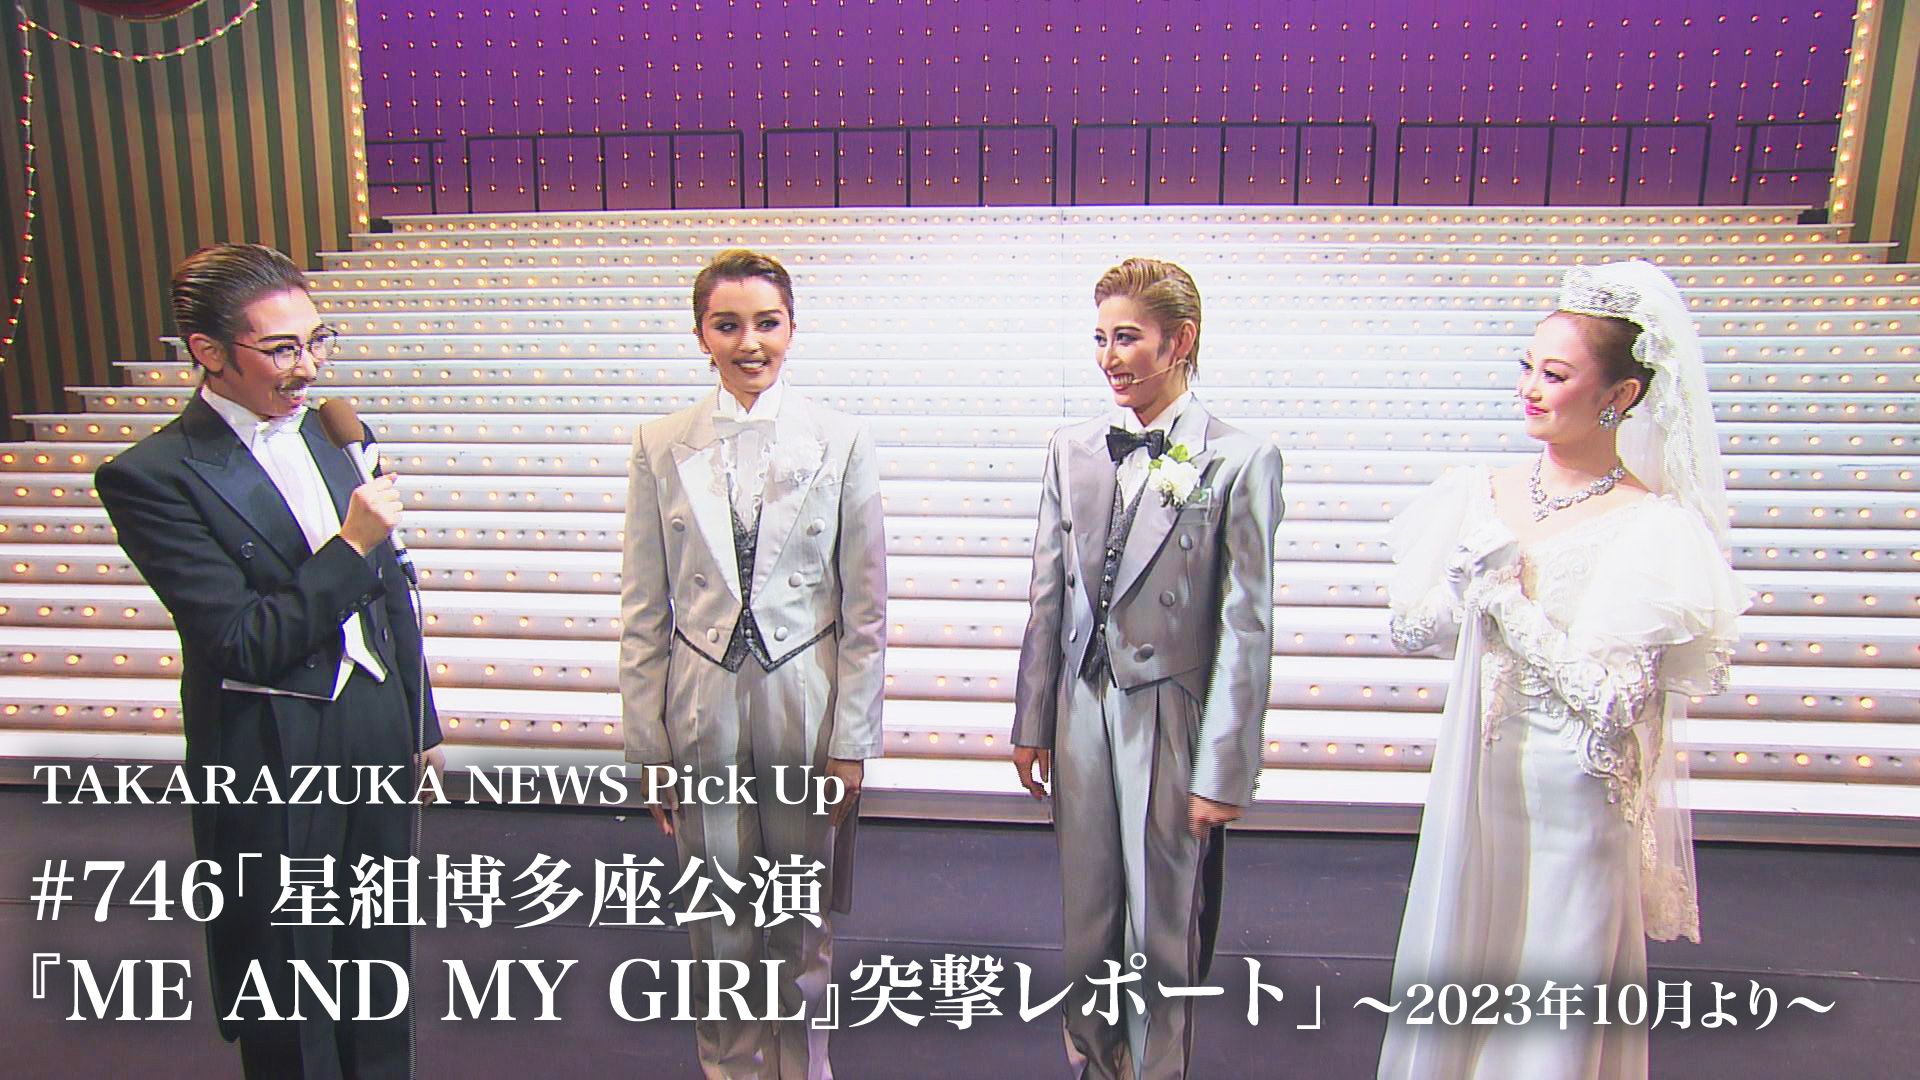 TAKARAZUKA NEWS Pick Up #746「星組博多座公演『ME AND MY GIRL』突撃レポート」〜2023年10月より〜